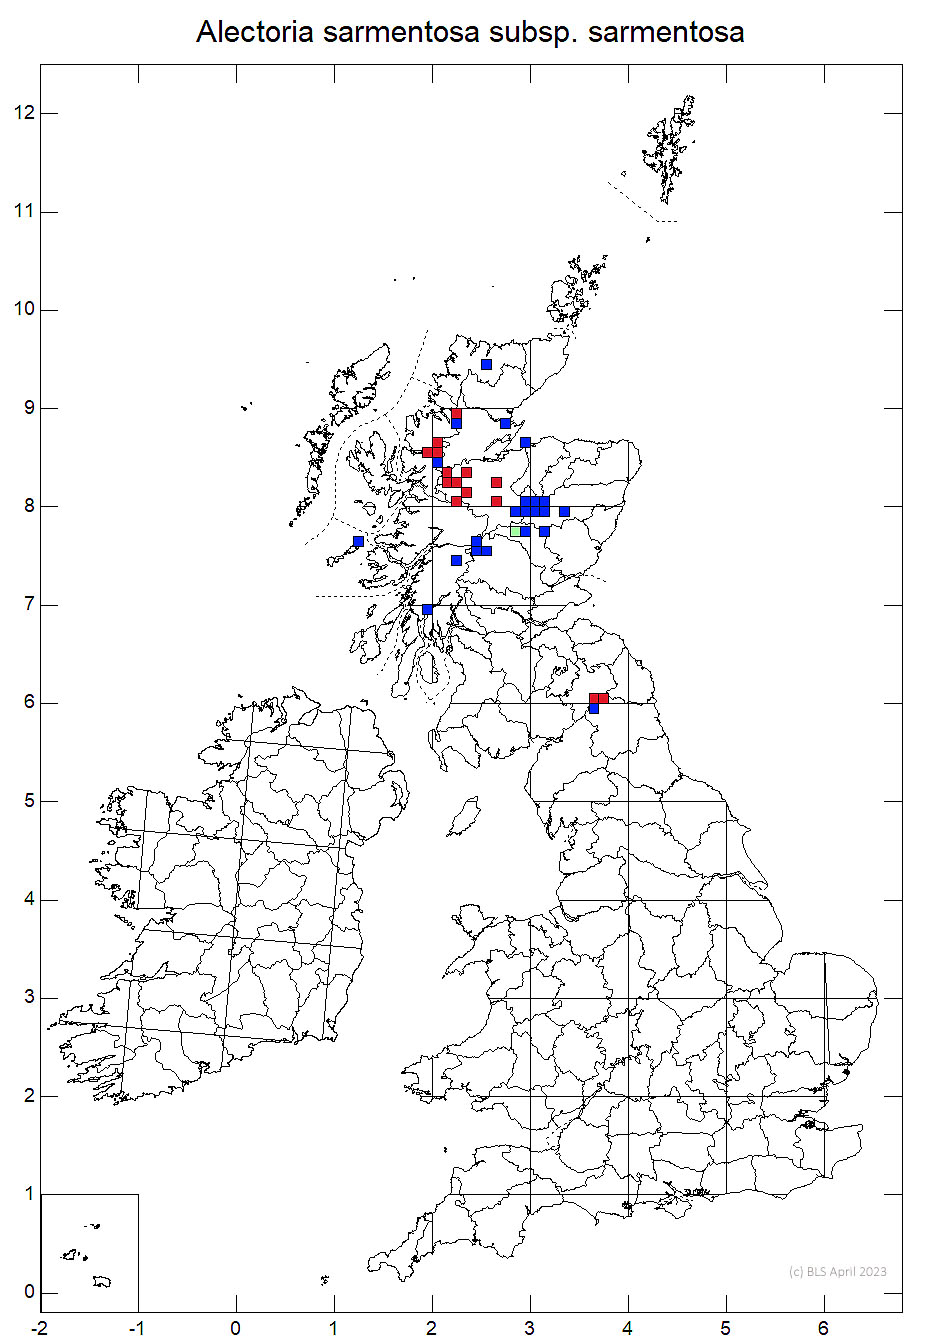 Alectoria sarmentosa subsp. sarmentosa 10km sq distribution map